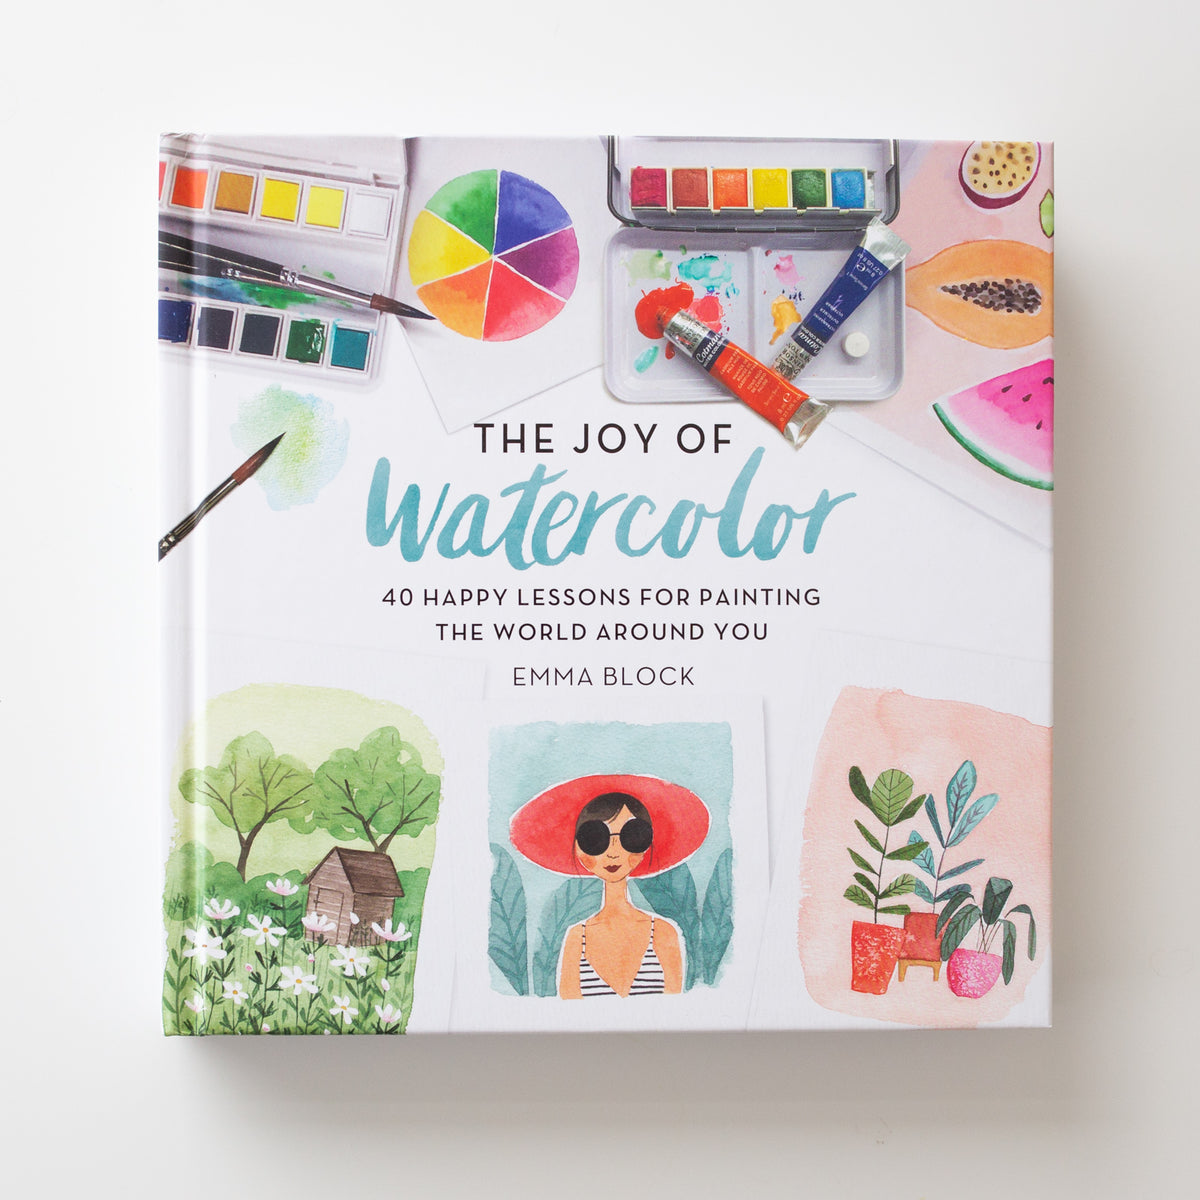 The Joy of Watercolor' by Emma Block